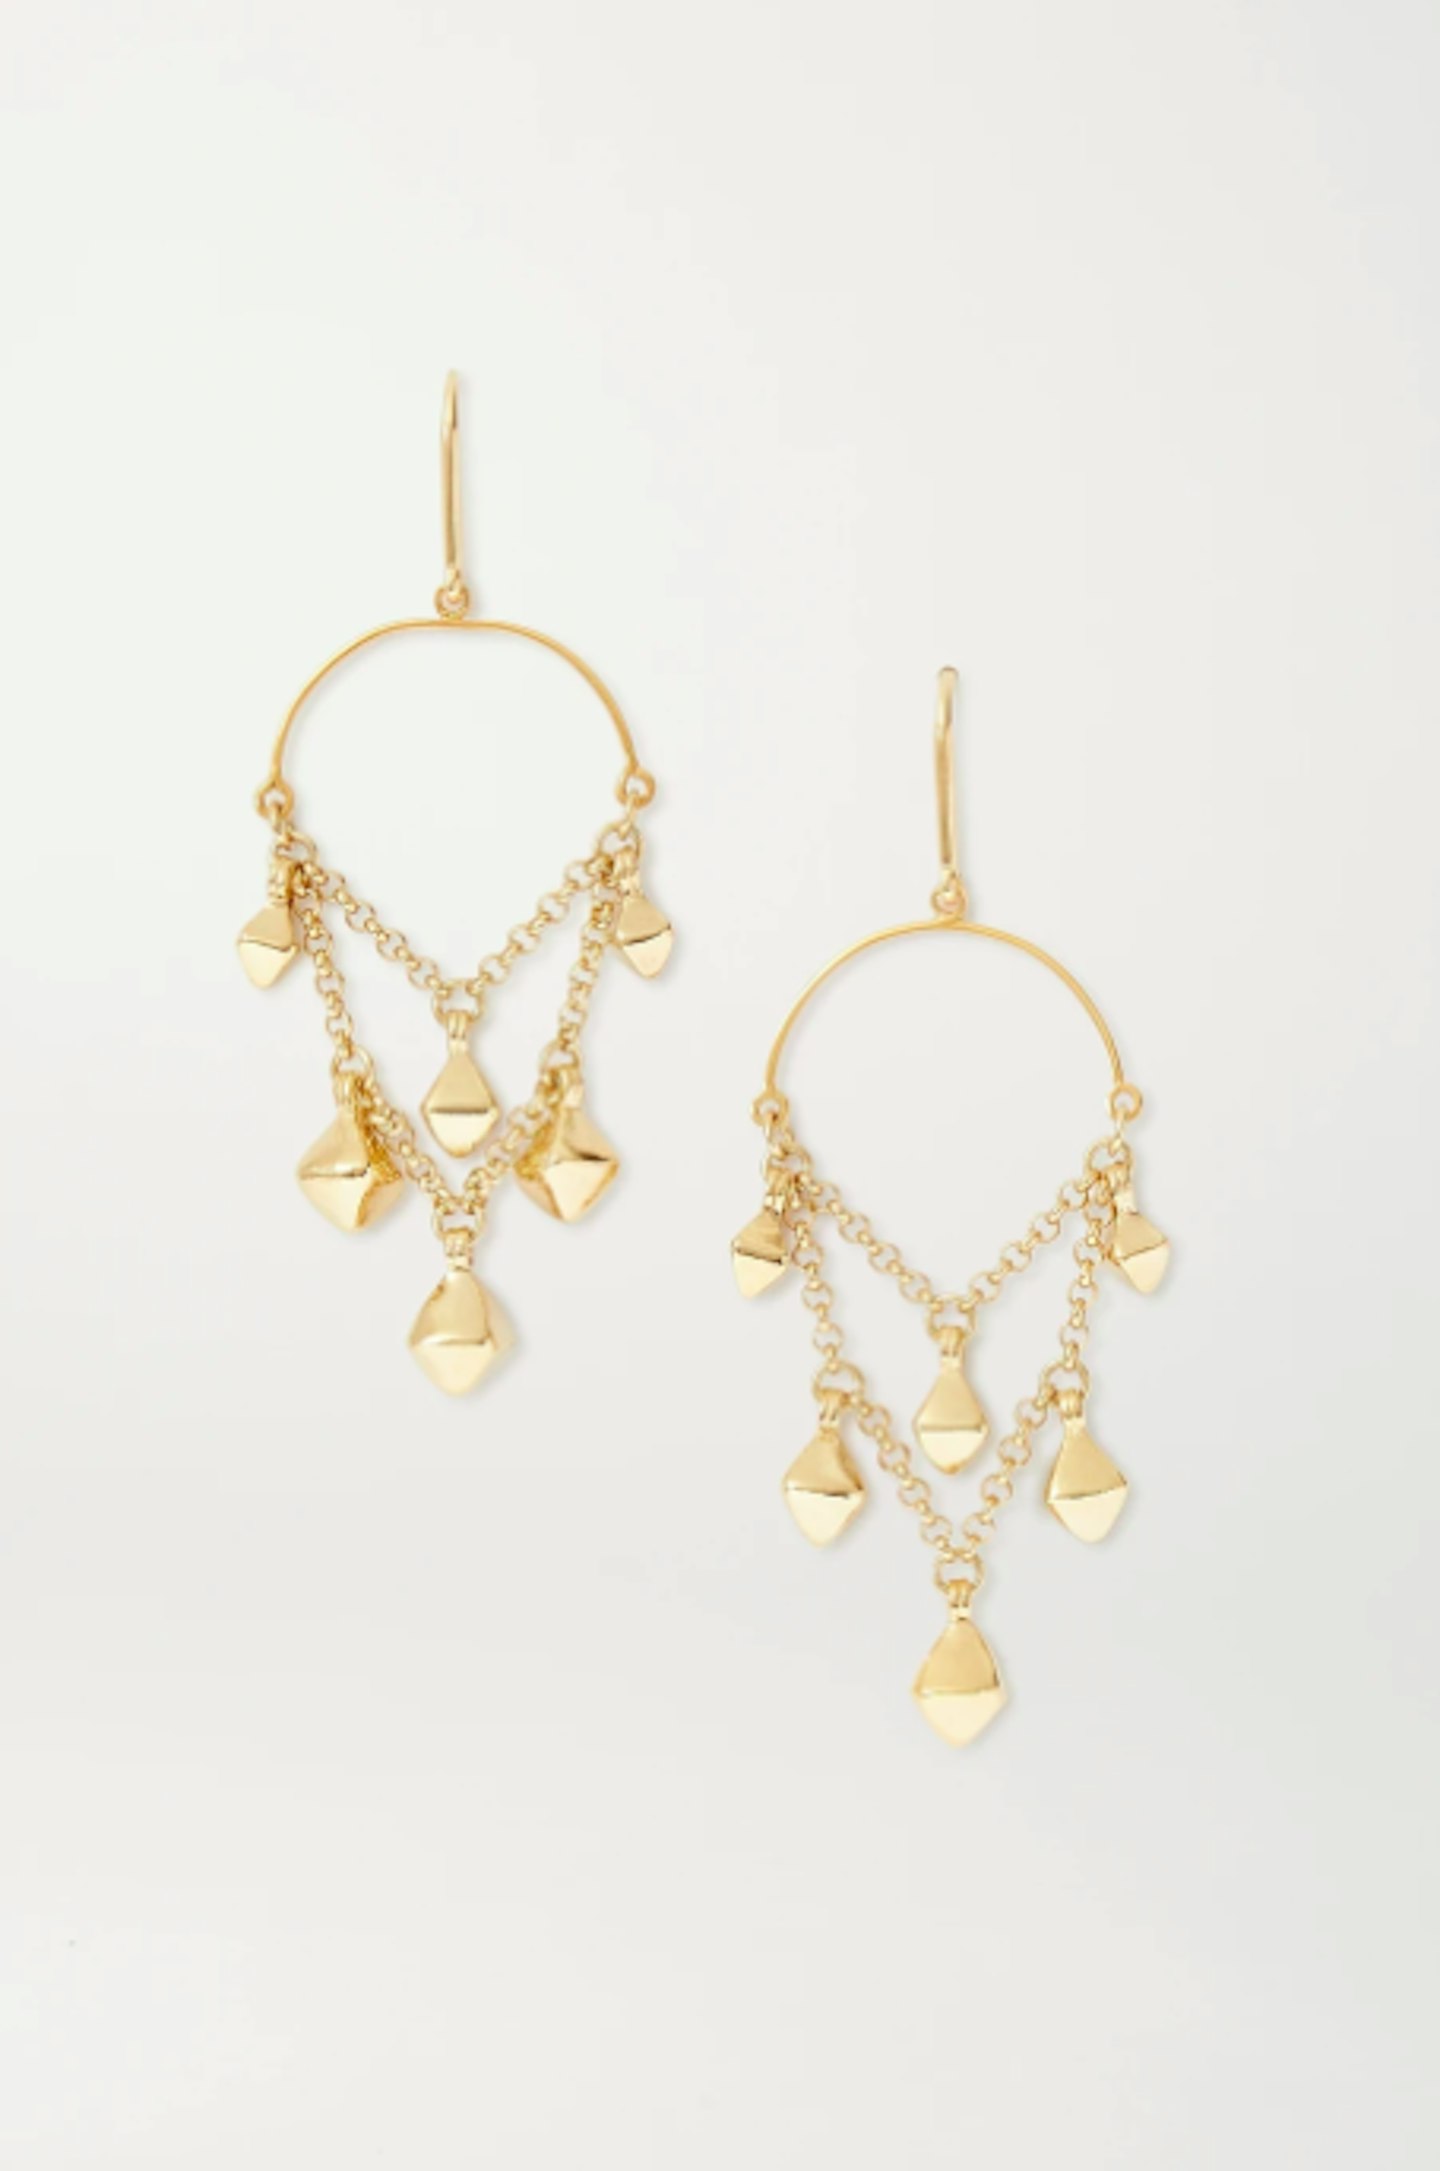 Isabel Marant, Tanganyika Gold-Tone Earrings, Was £180, Now £90